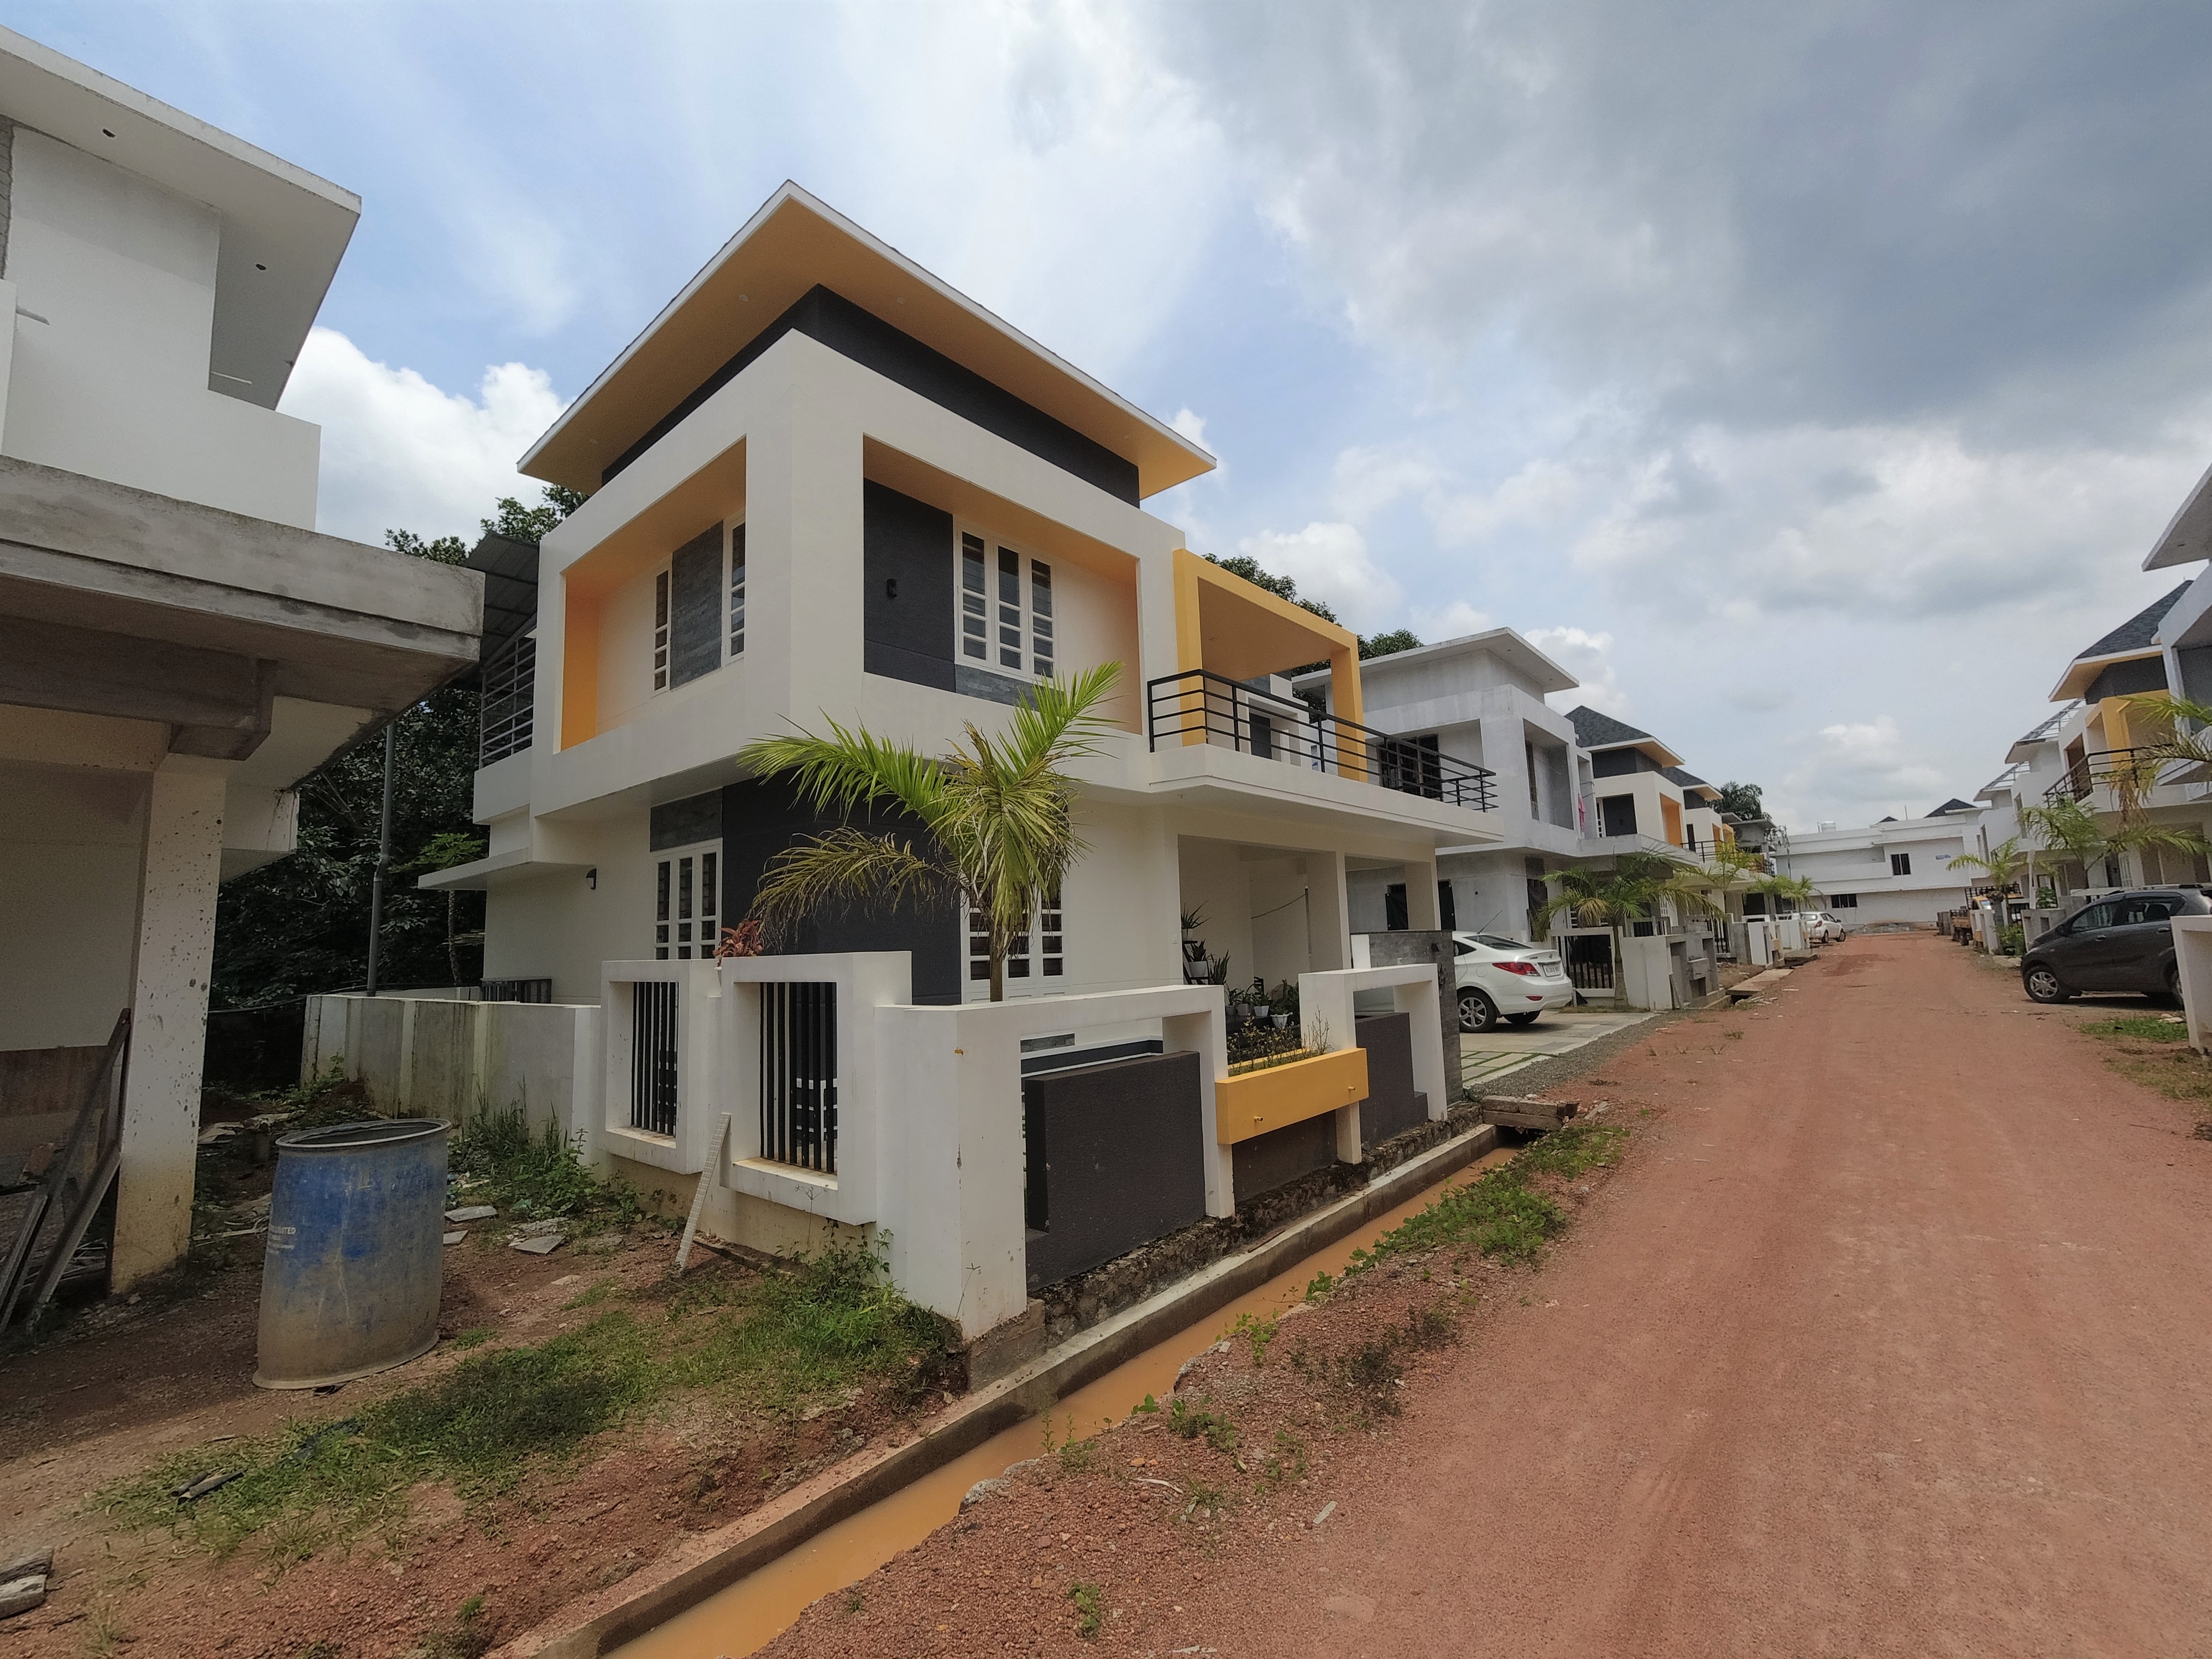 4 bhk luxury villa builders in pathanamthitta